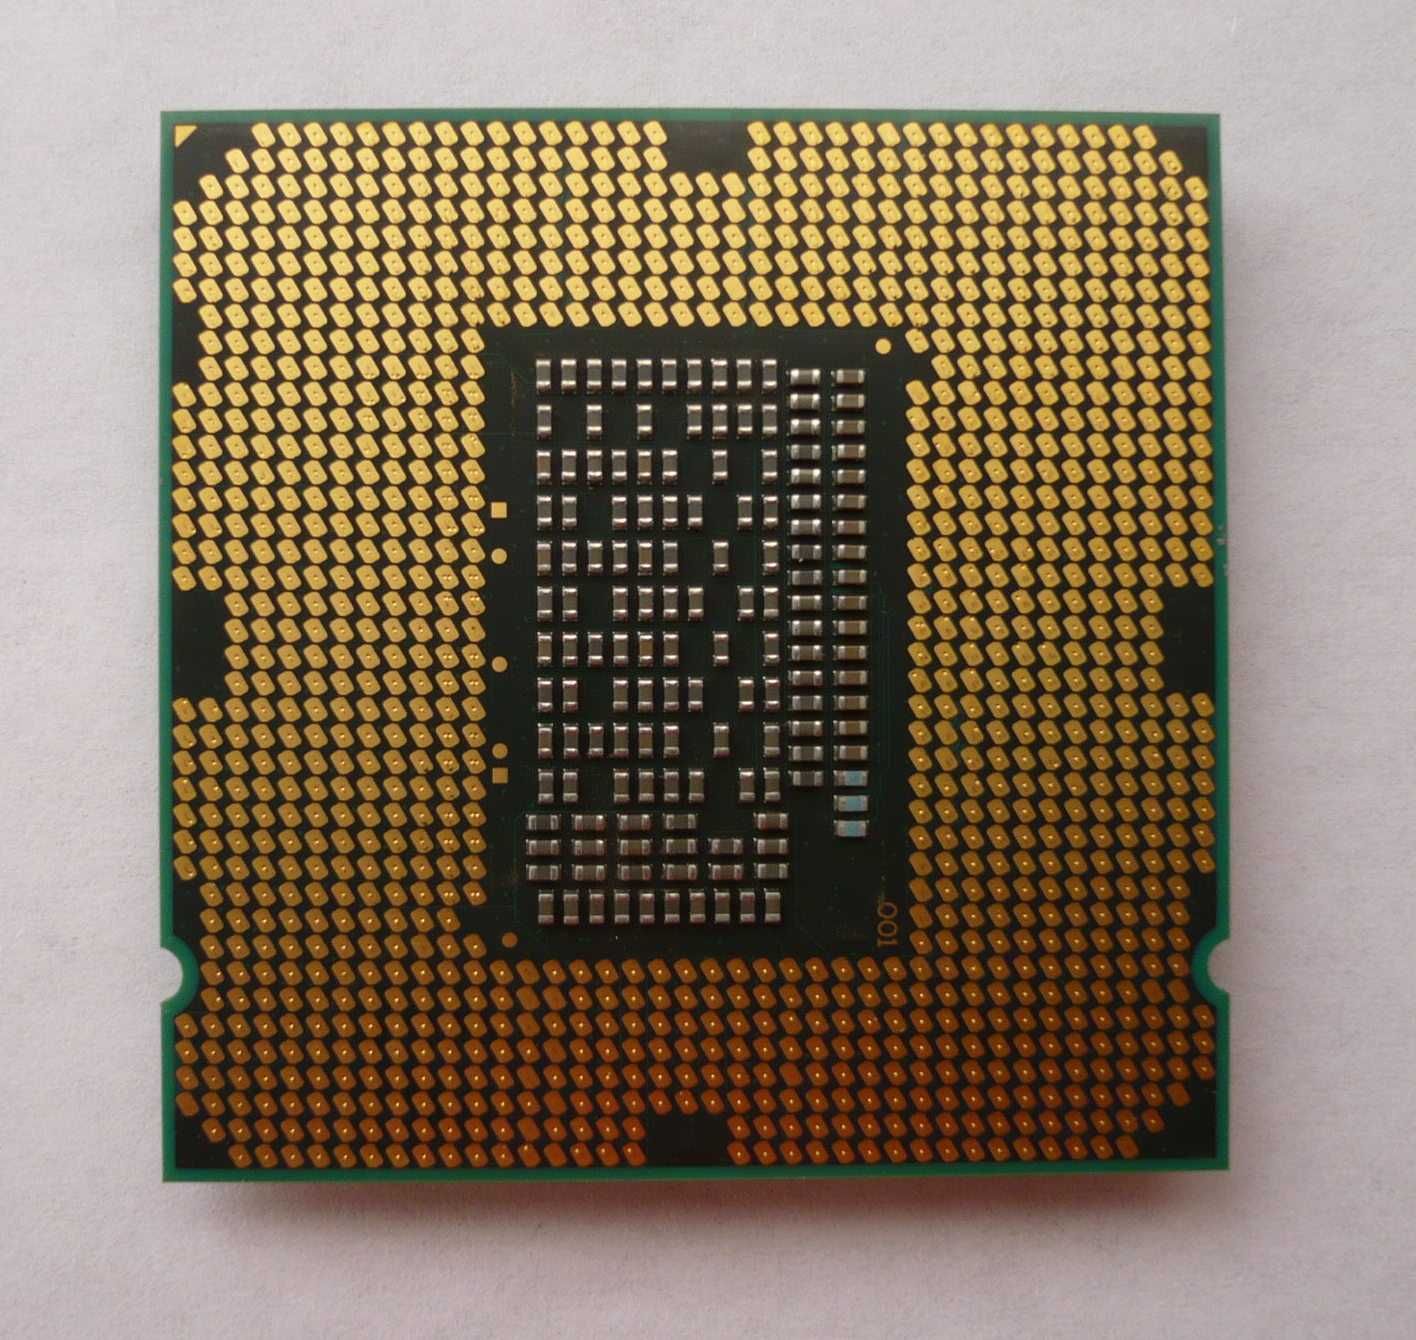 Procesor Intel Pentium G630 2,7GHz